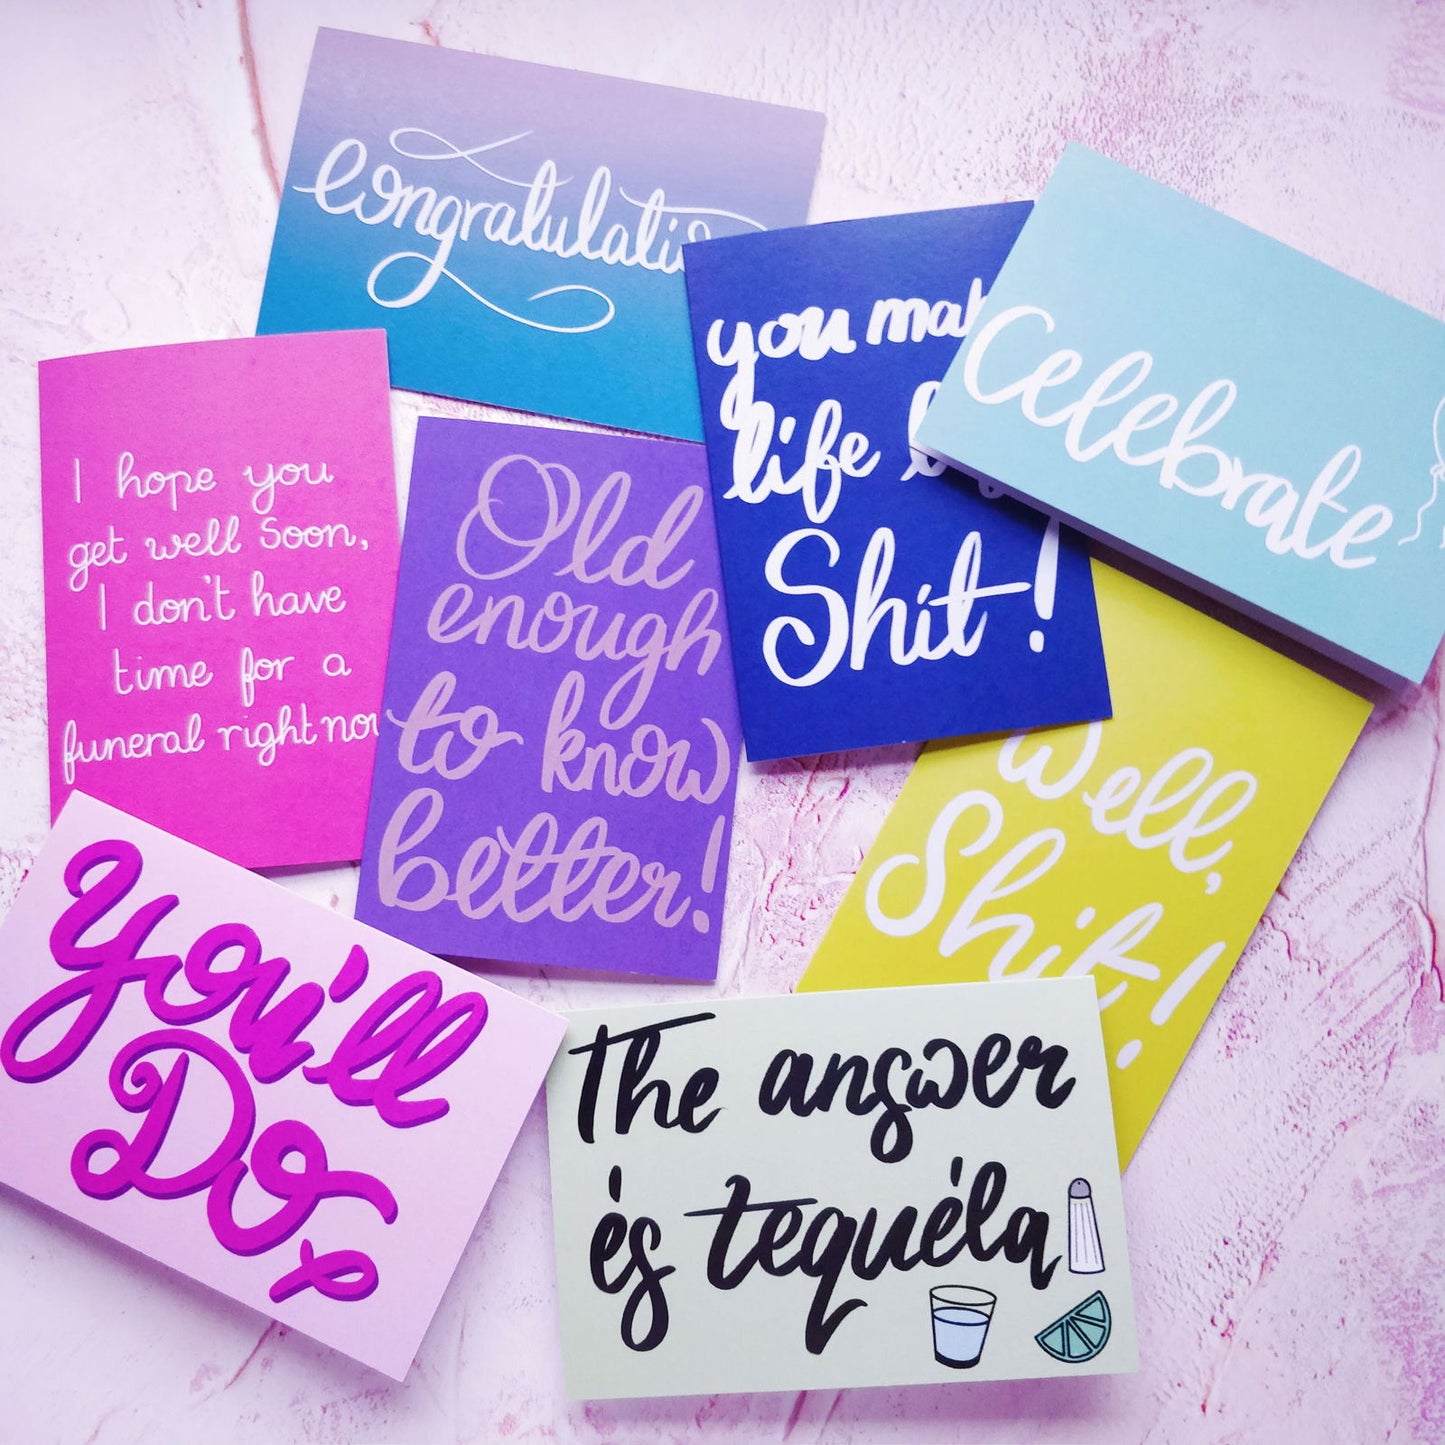 Celebrate Greeting Card - Fay Dixon Design